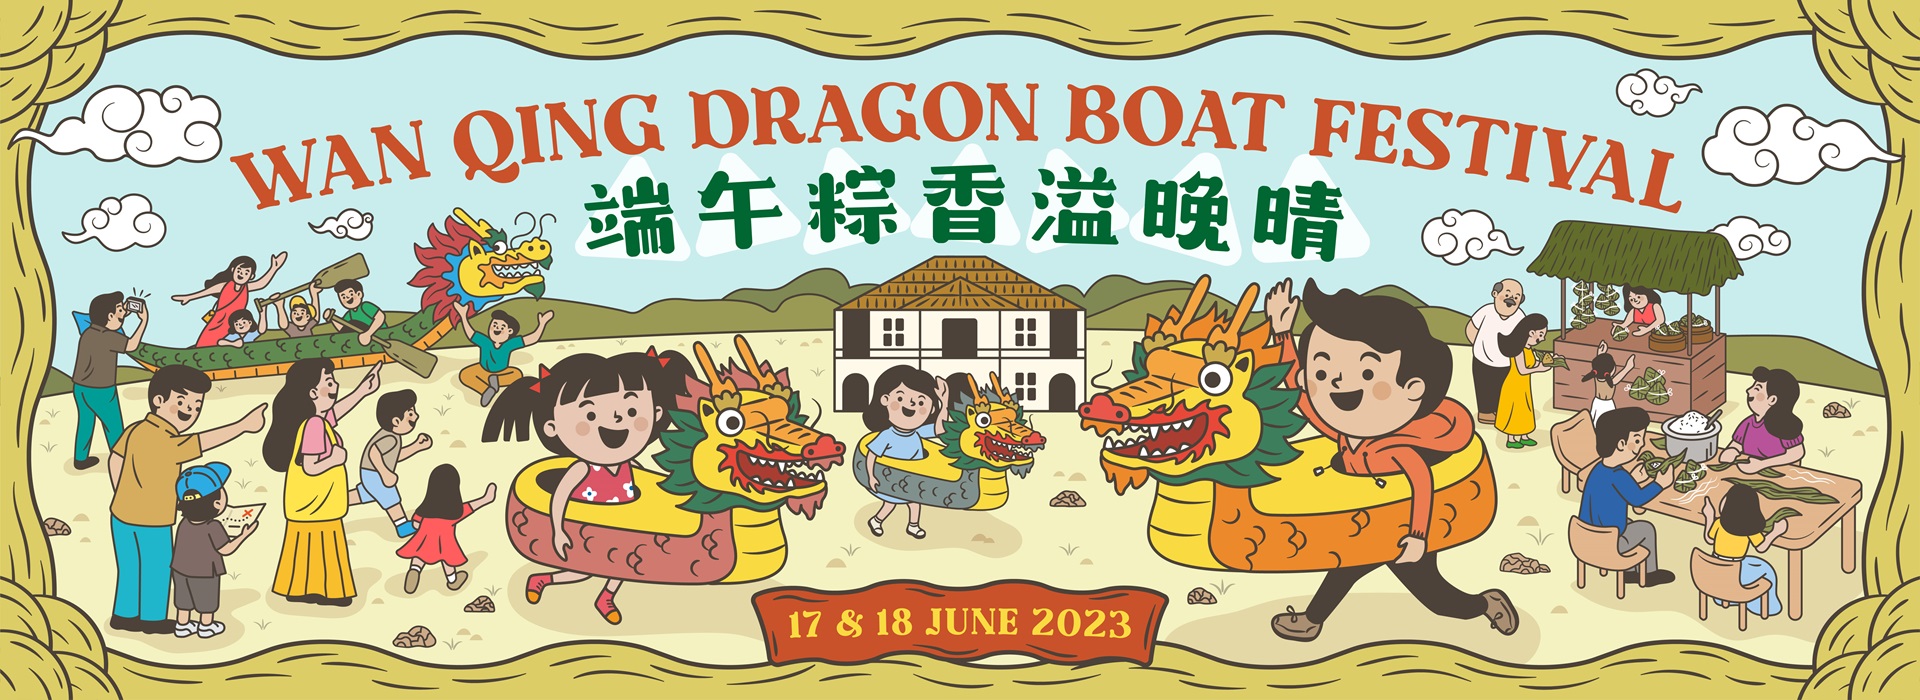 Wan Qing Dragon Boat Festival 2023